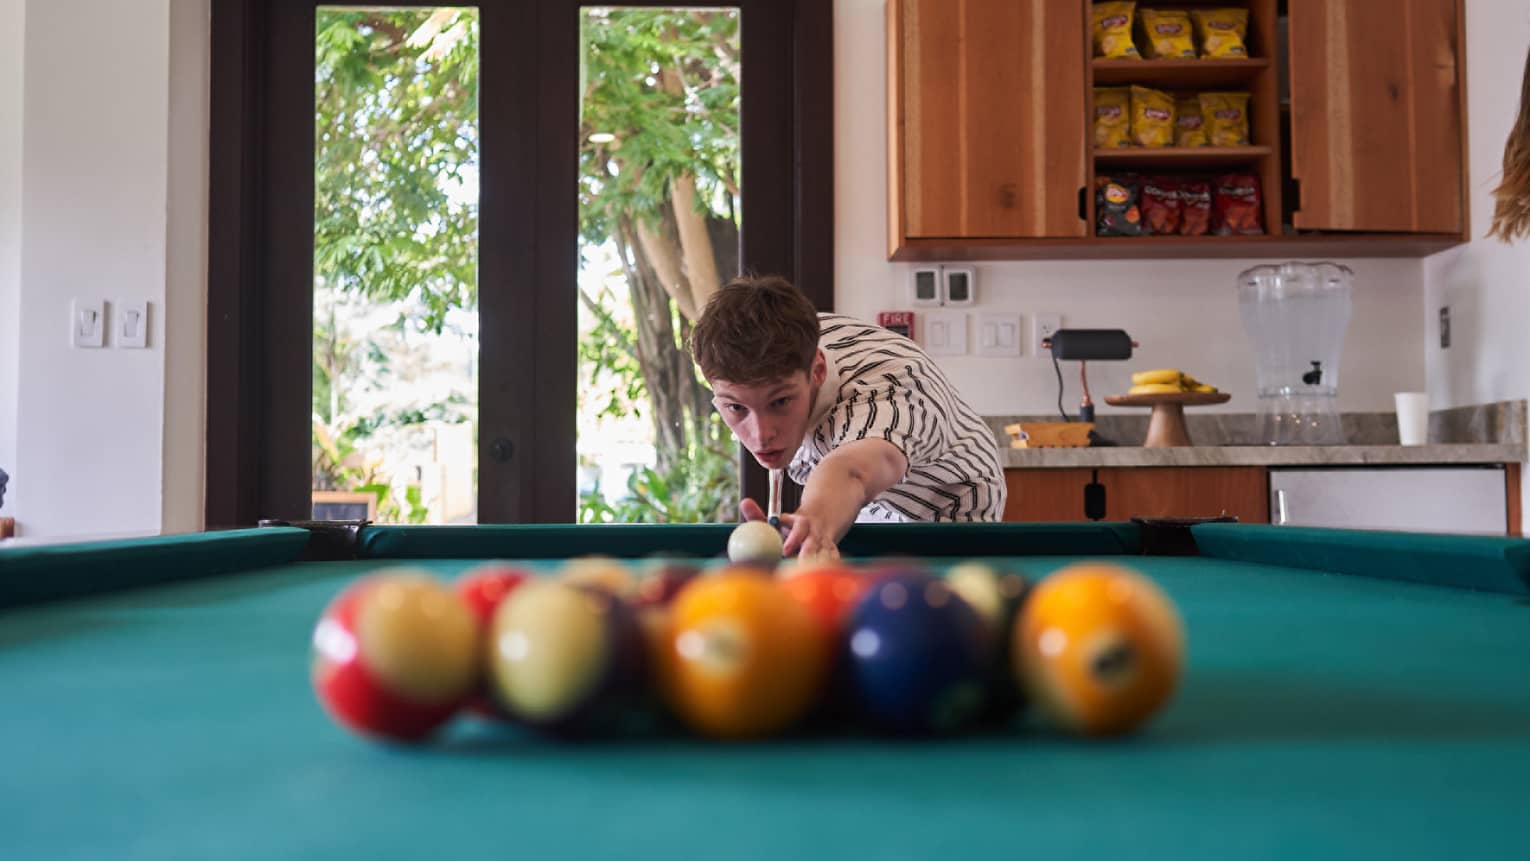 Teenage boy setting up to break a set of billard balls on a teal pool table